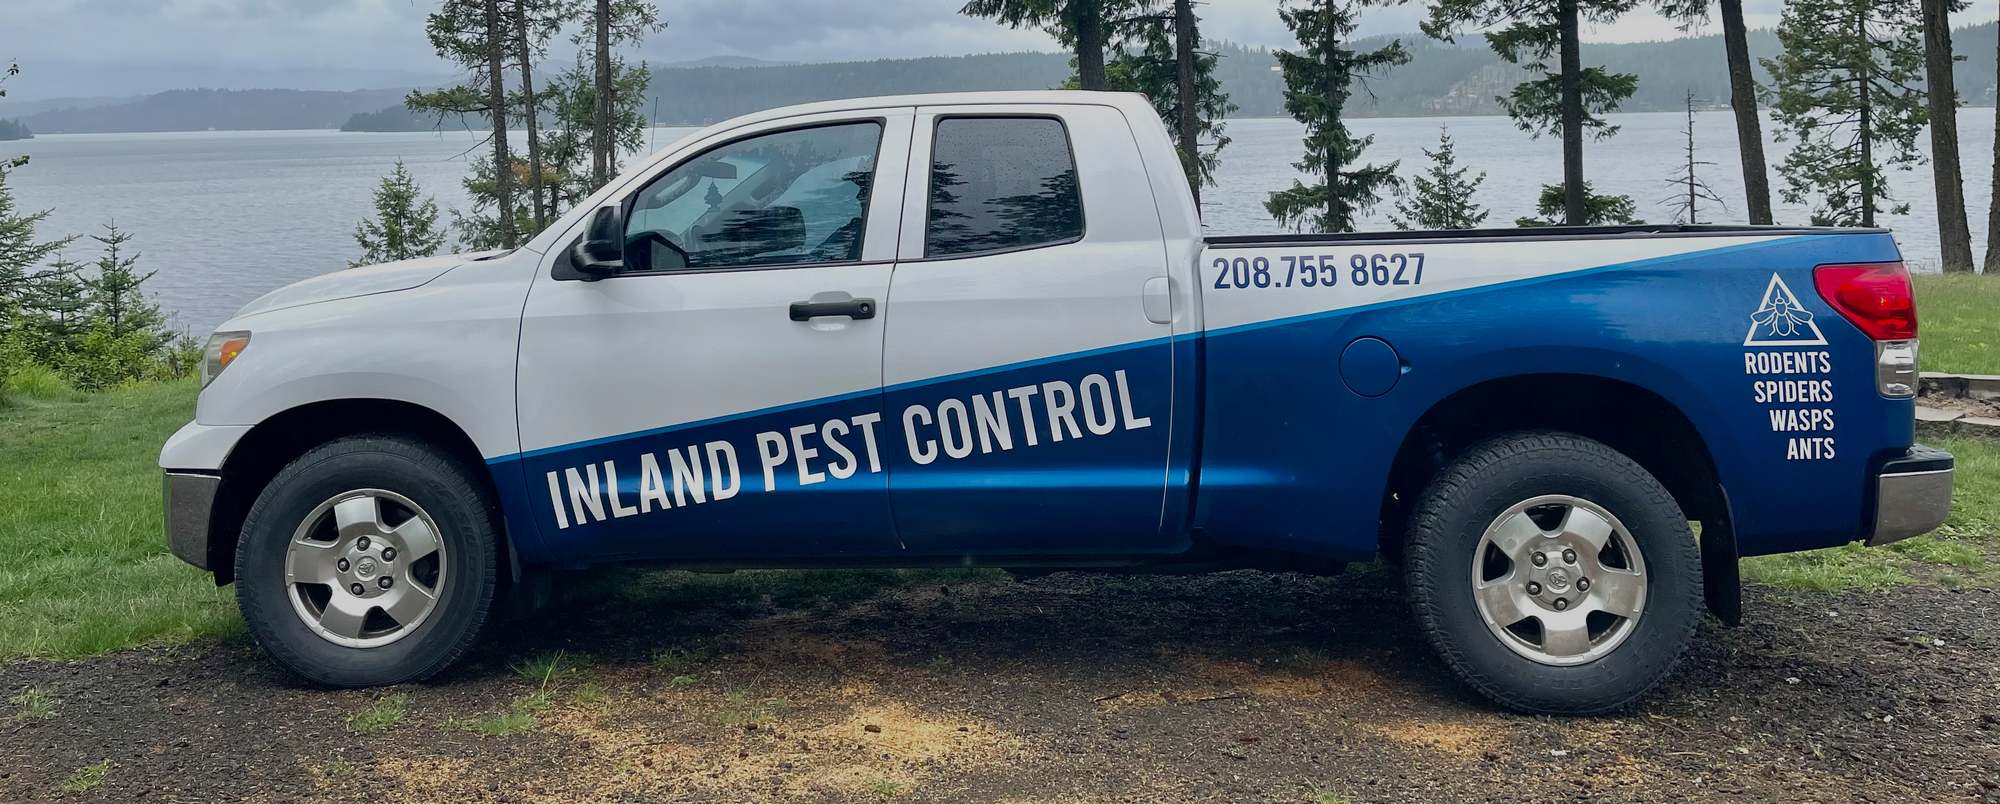 Inland Pest control Truck